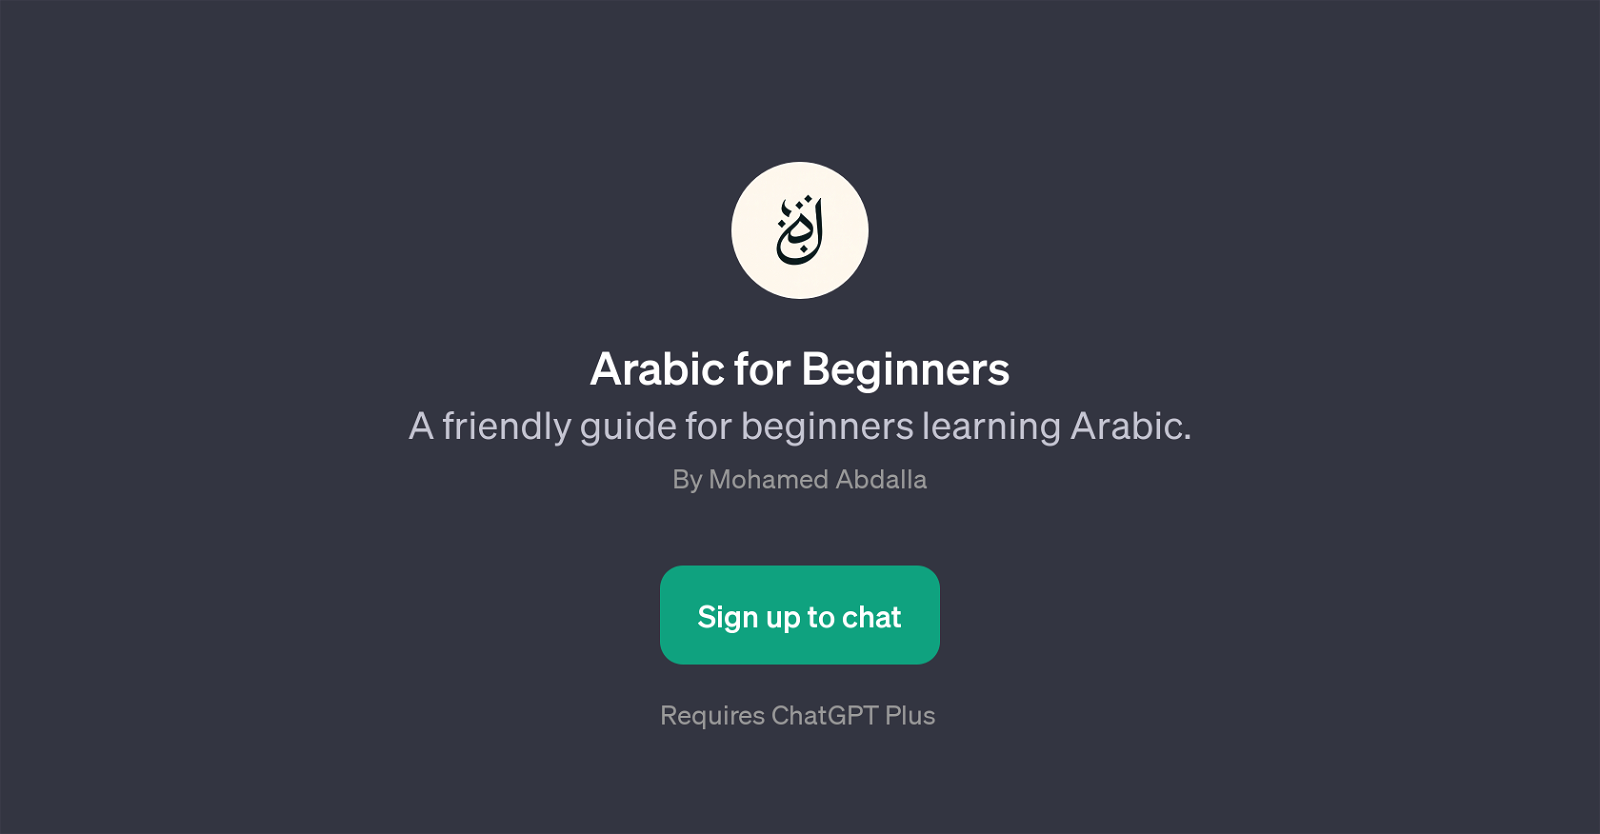 Arabic for Beginners website